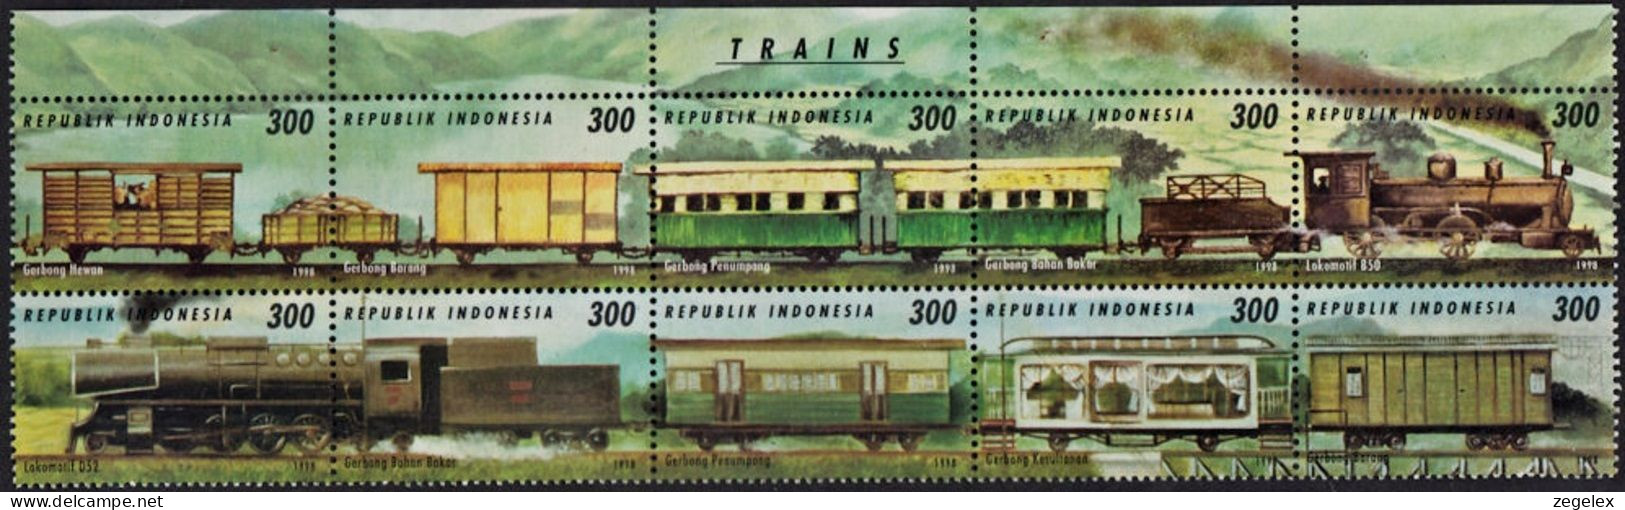 Indonesia 1998 Trains MNH ** ZBL 1877/1886 - Indonésie